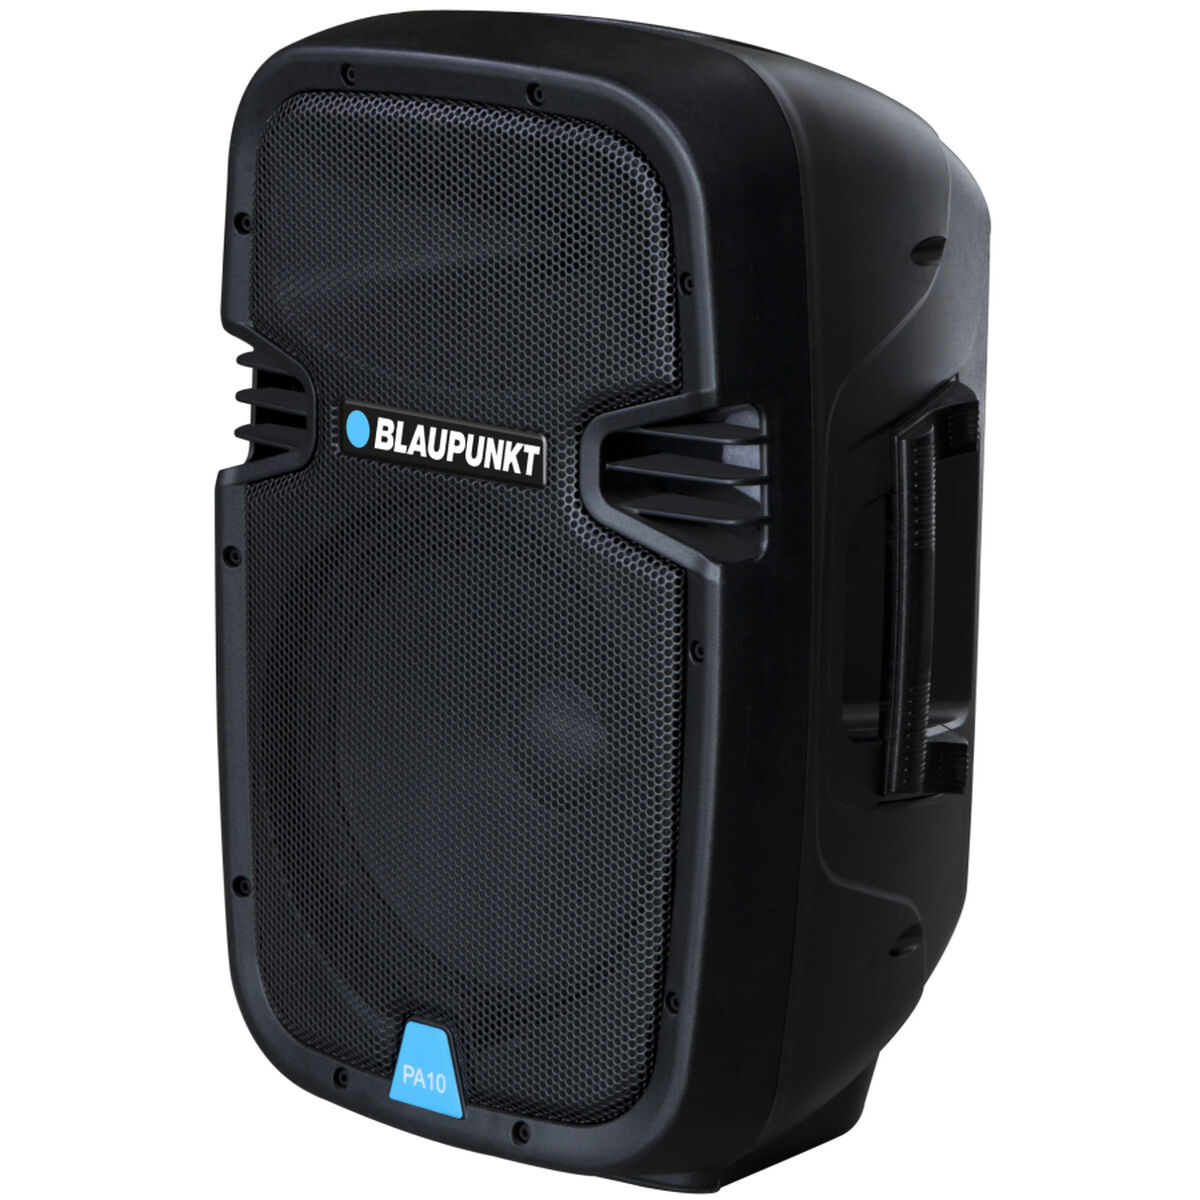 Altoparlante Bluetooth Portatile Blaupunkt Profesjonalny system audio PA10 Nero 600 W